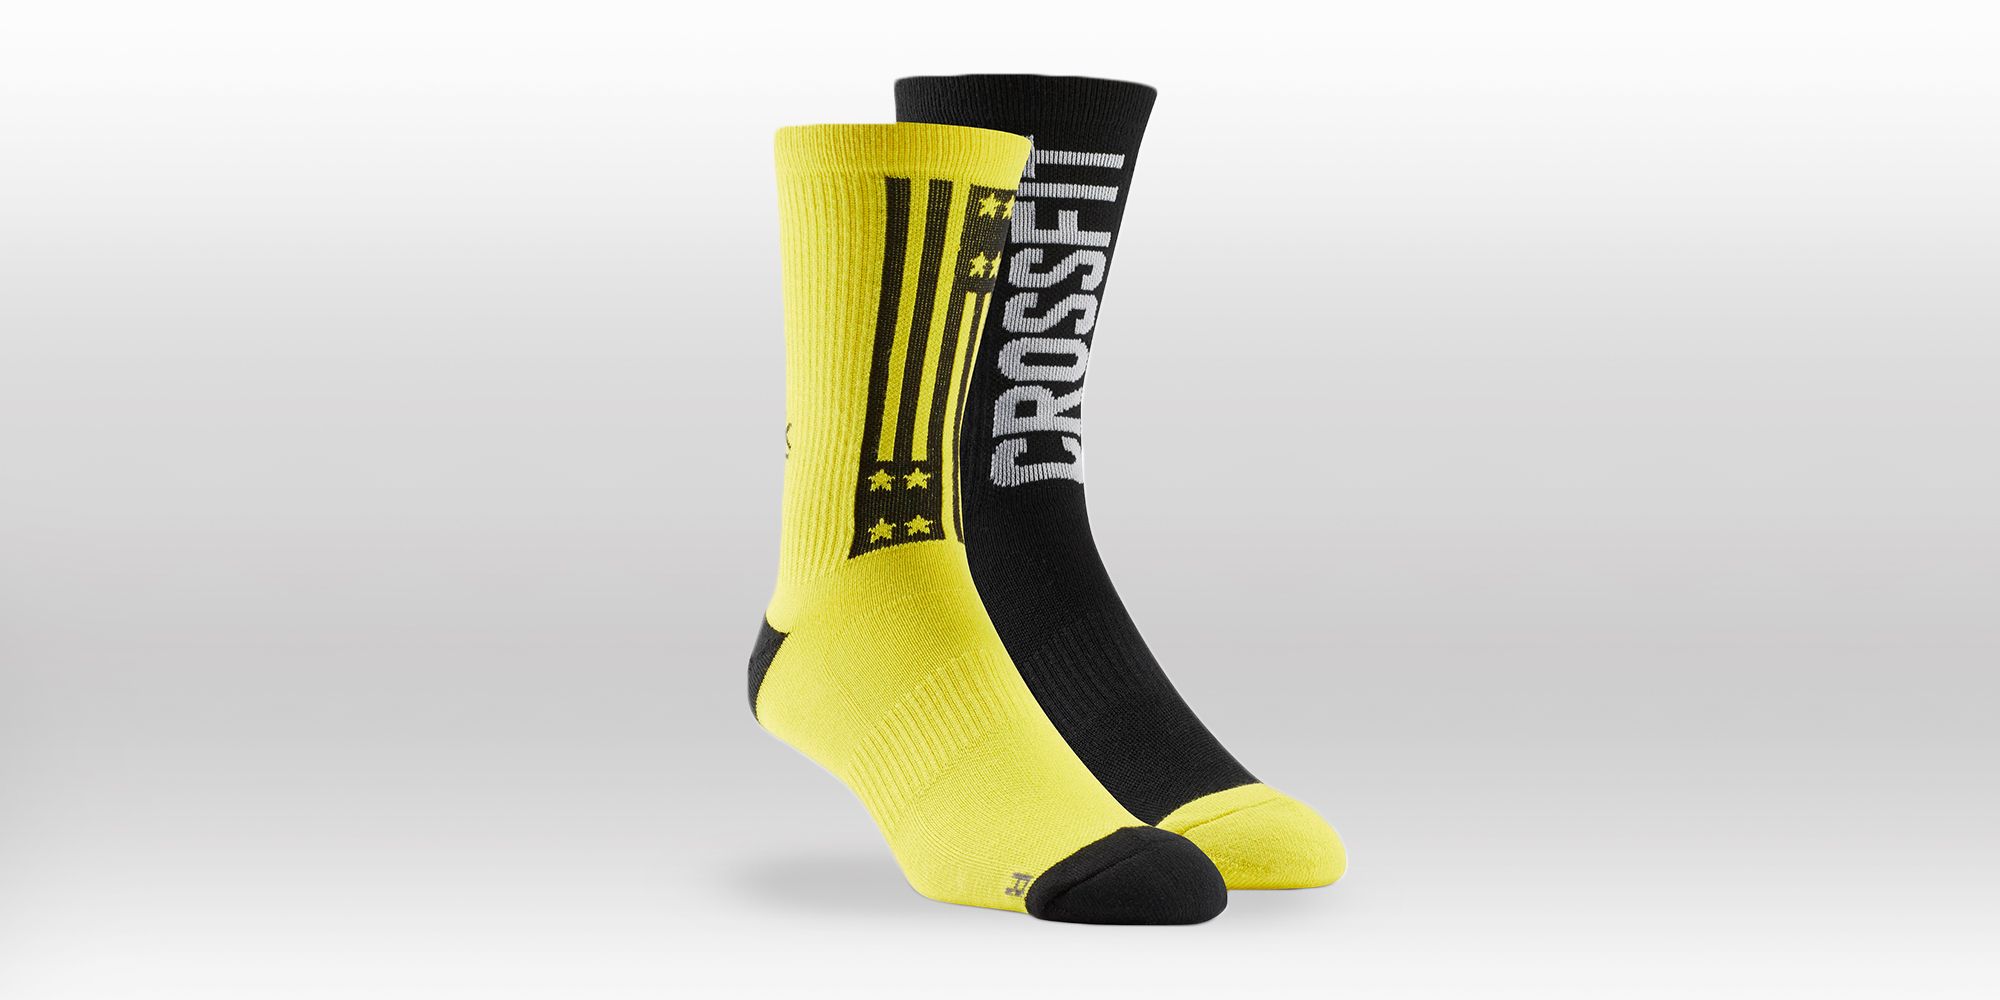 10 Best Crossfit Socks 2018 - Crossfit Compression Knee Socks